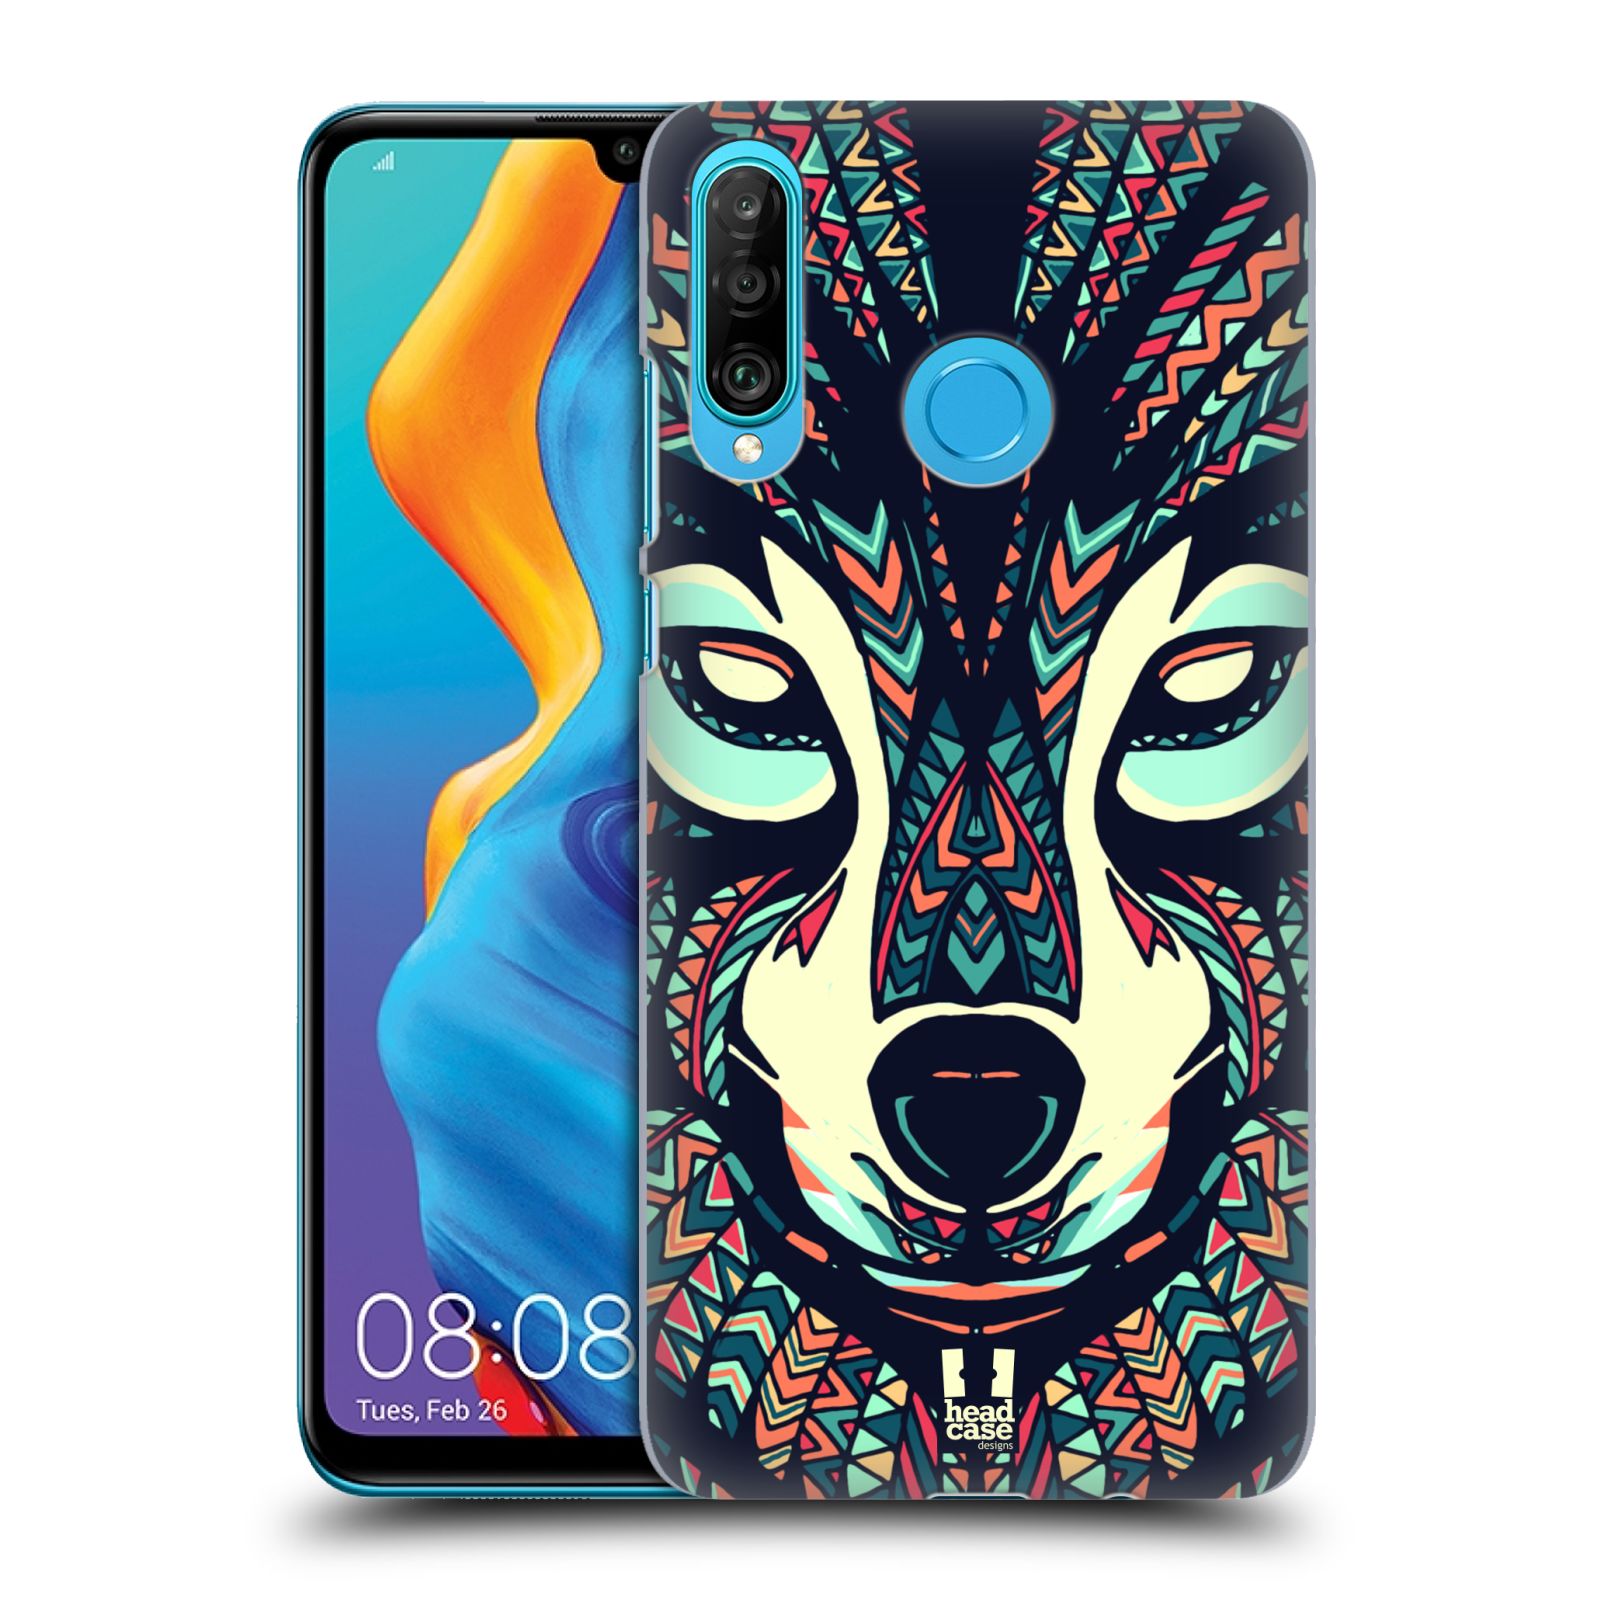 Pouzdro na mobil Huawei P30 LITE - HEAD CASE - vzor Aztécký motiv zvíře 3 vlk